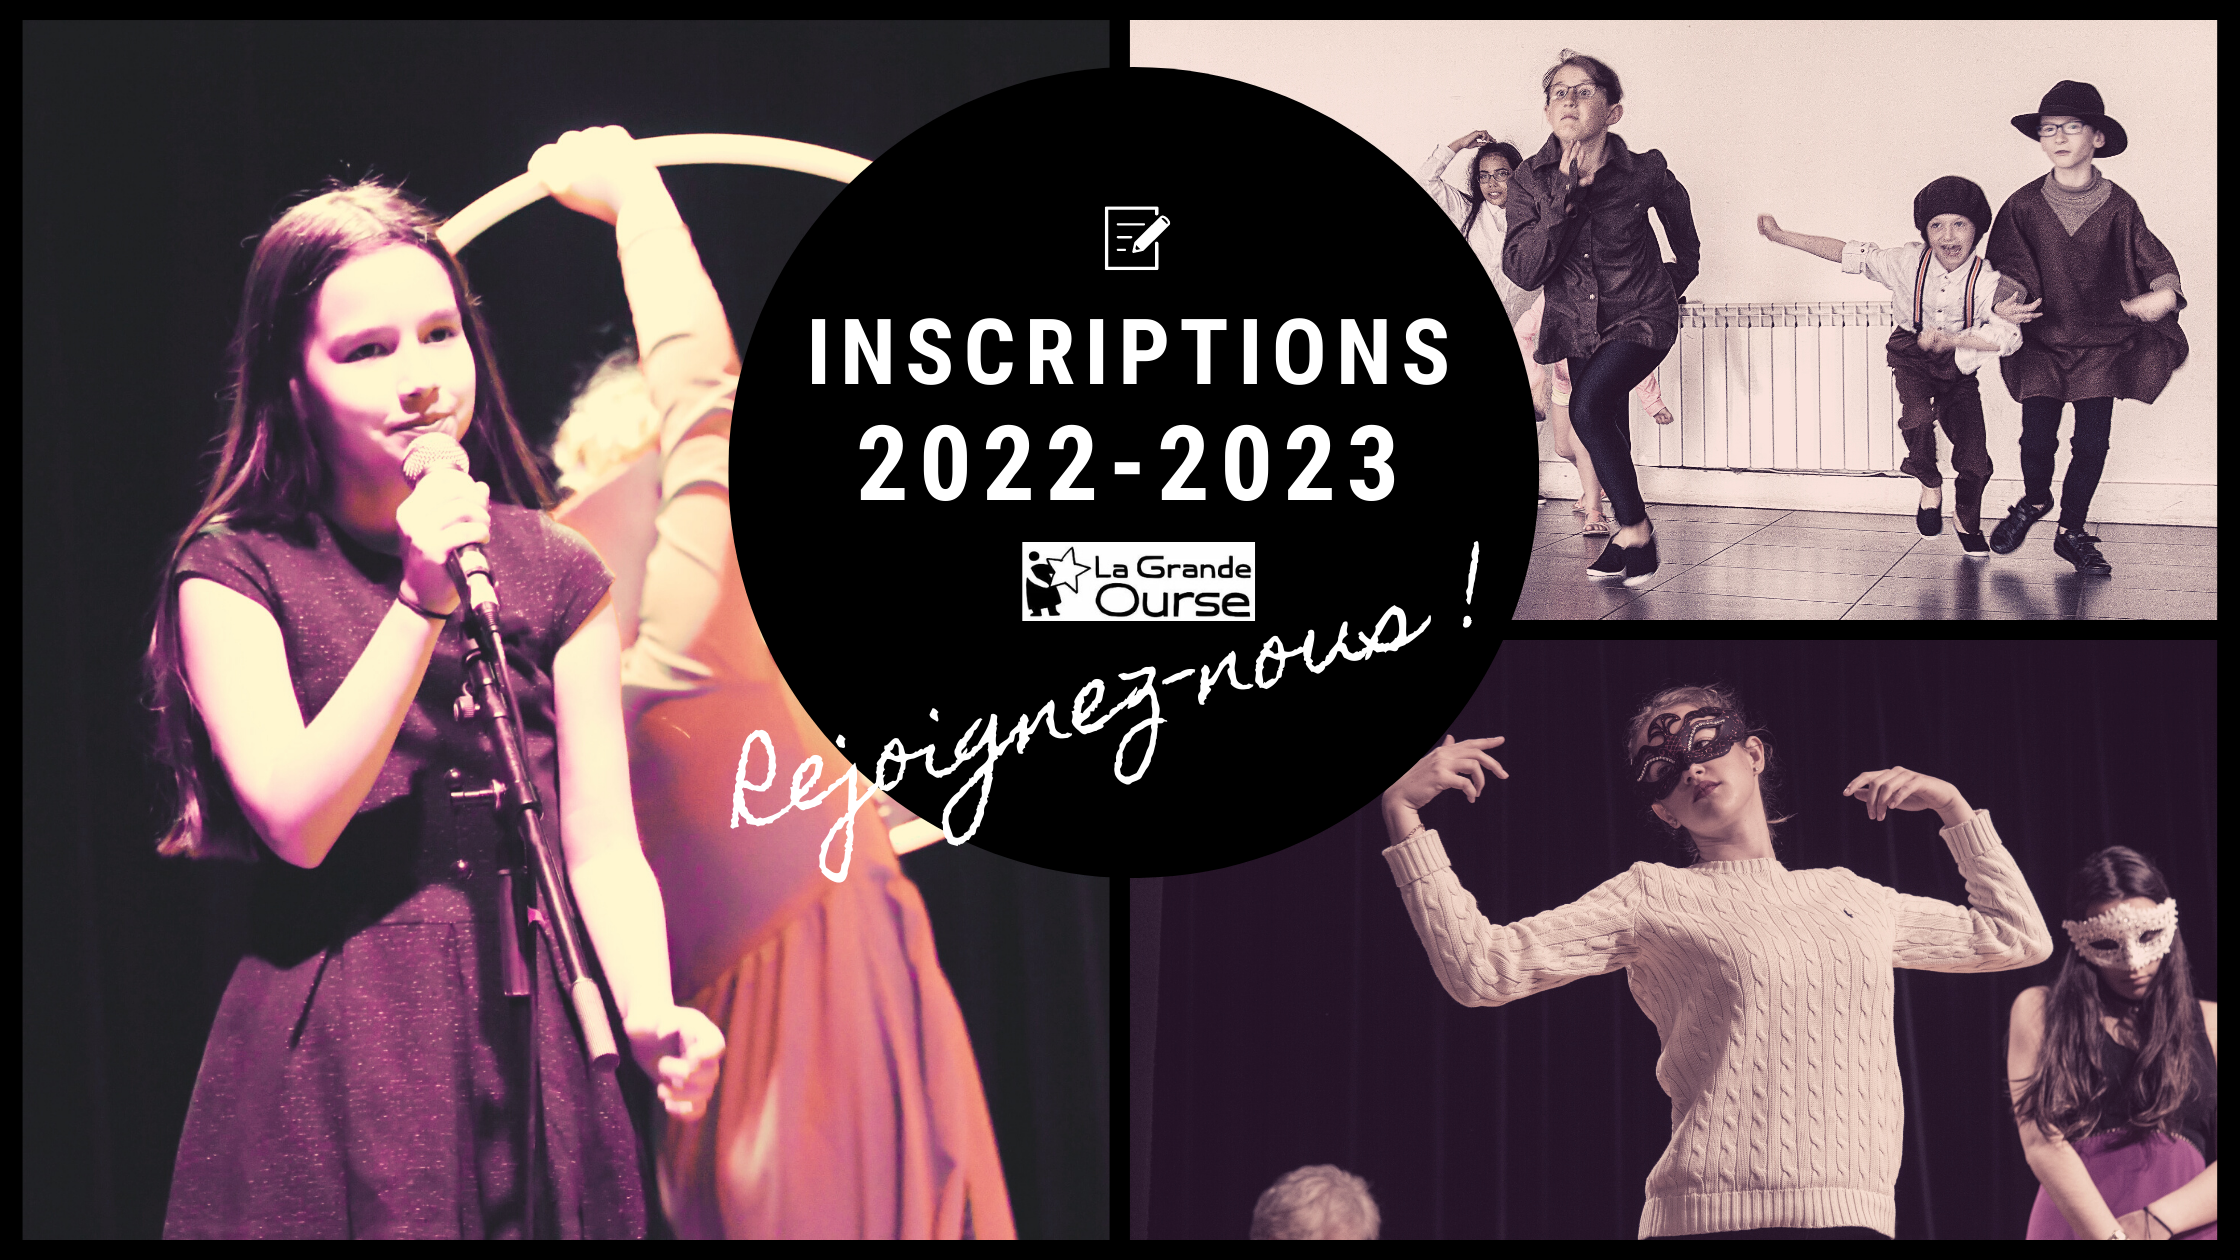 INSCRIPTIONS 2022 - 2023